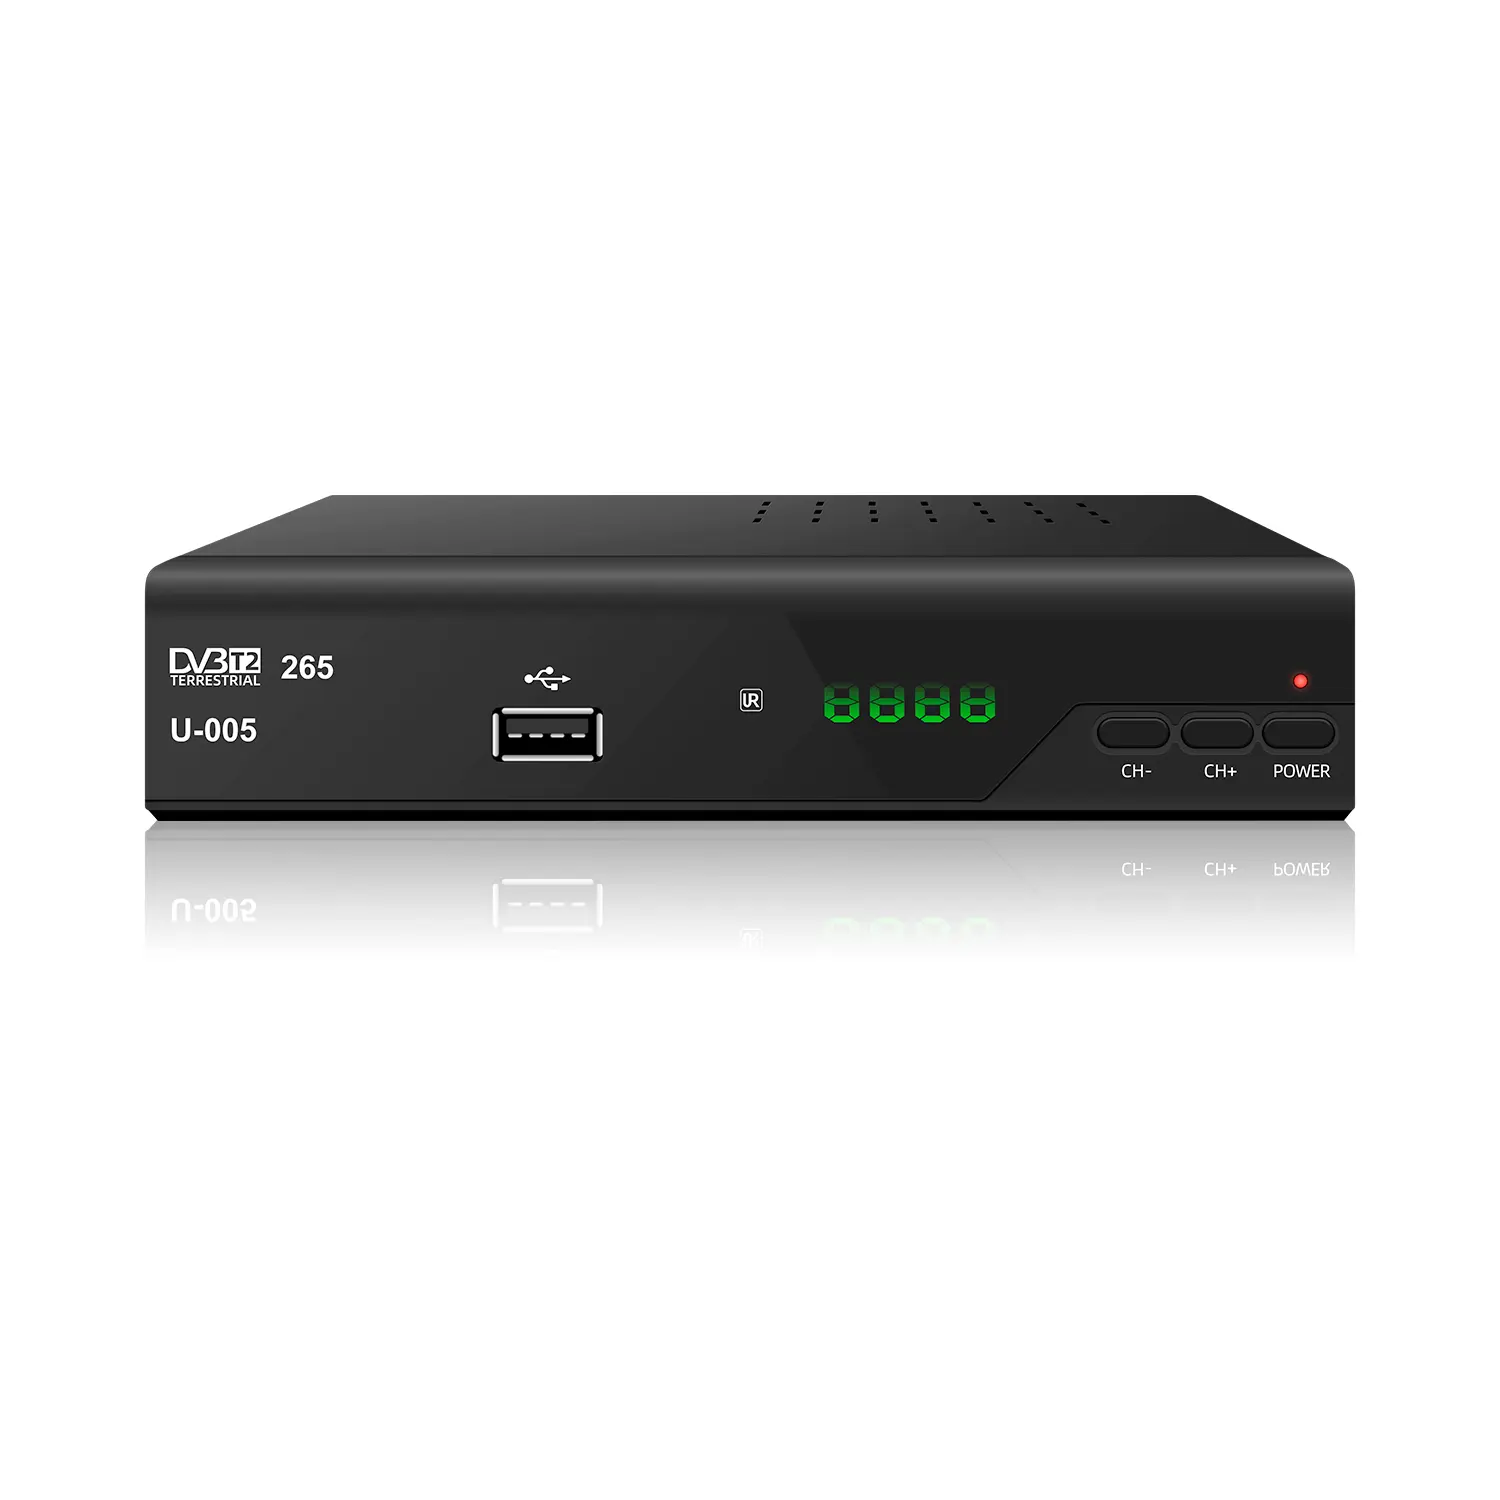 1080P DVB T2 TV Box H.265 декодер FTA цифровой dvb t2 приемник с поддержкой MPEG4 10 бит двойной Wi-Fi YOU-YUBE HD приставка.